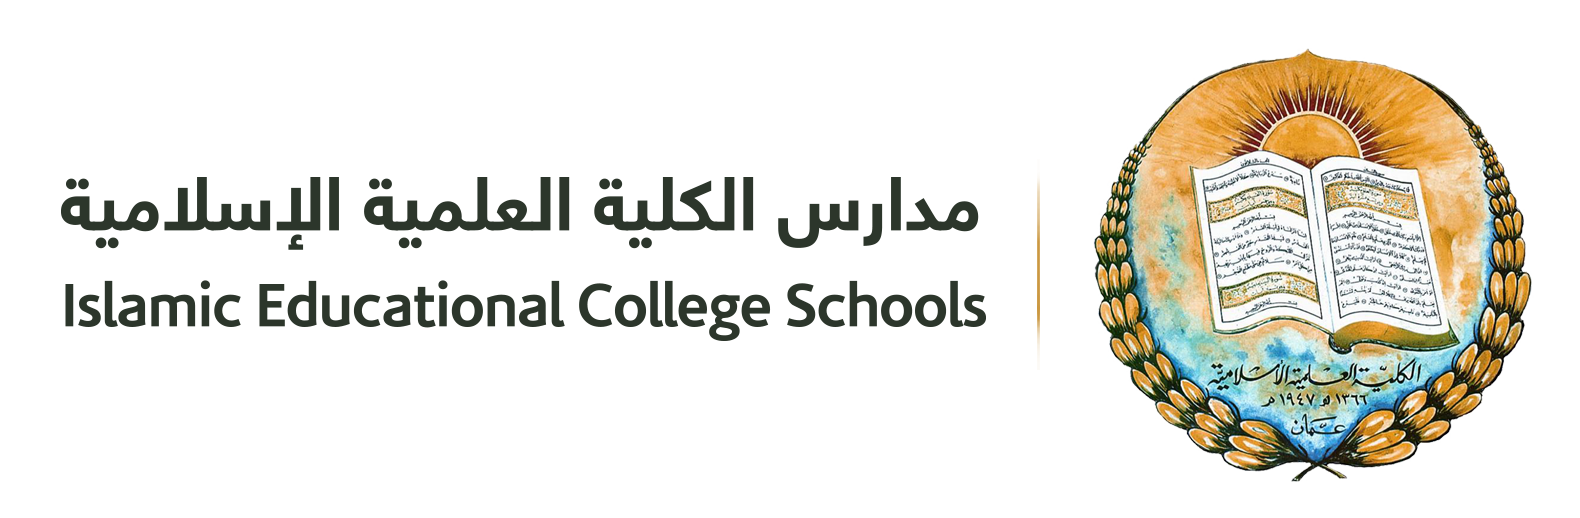 Islamic Educational College Schools